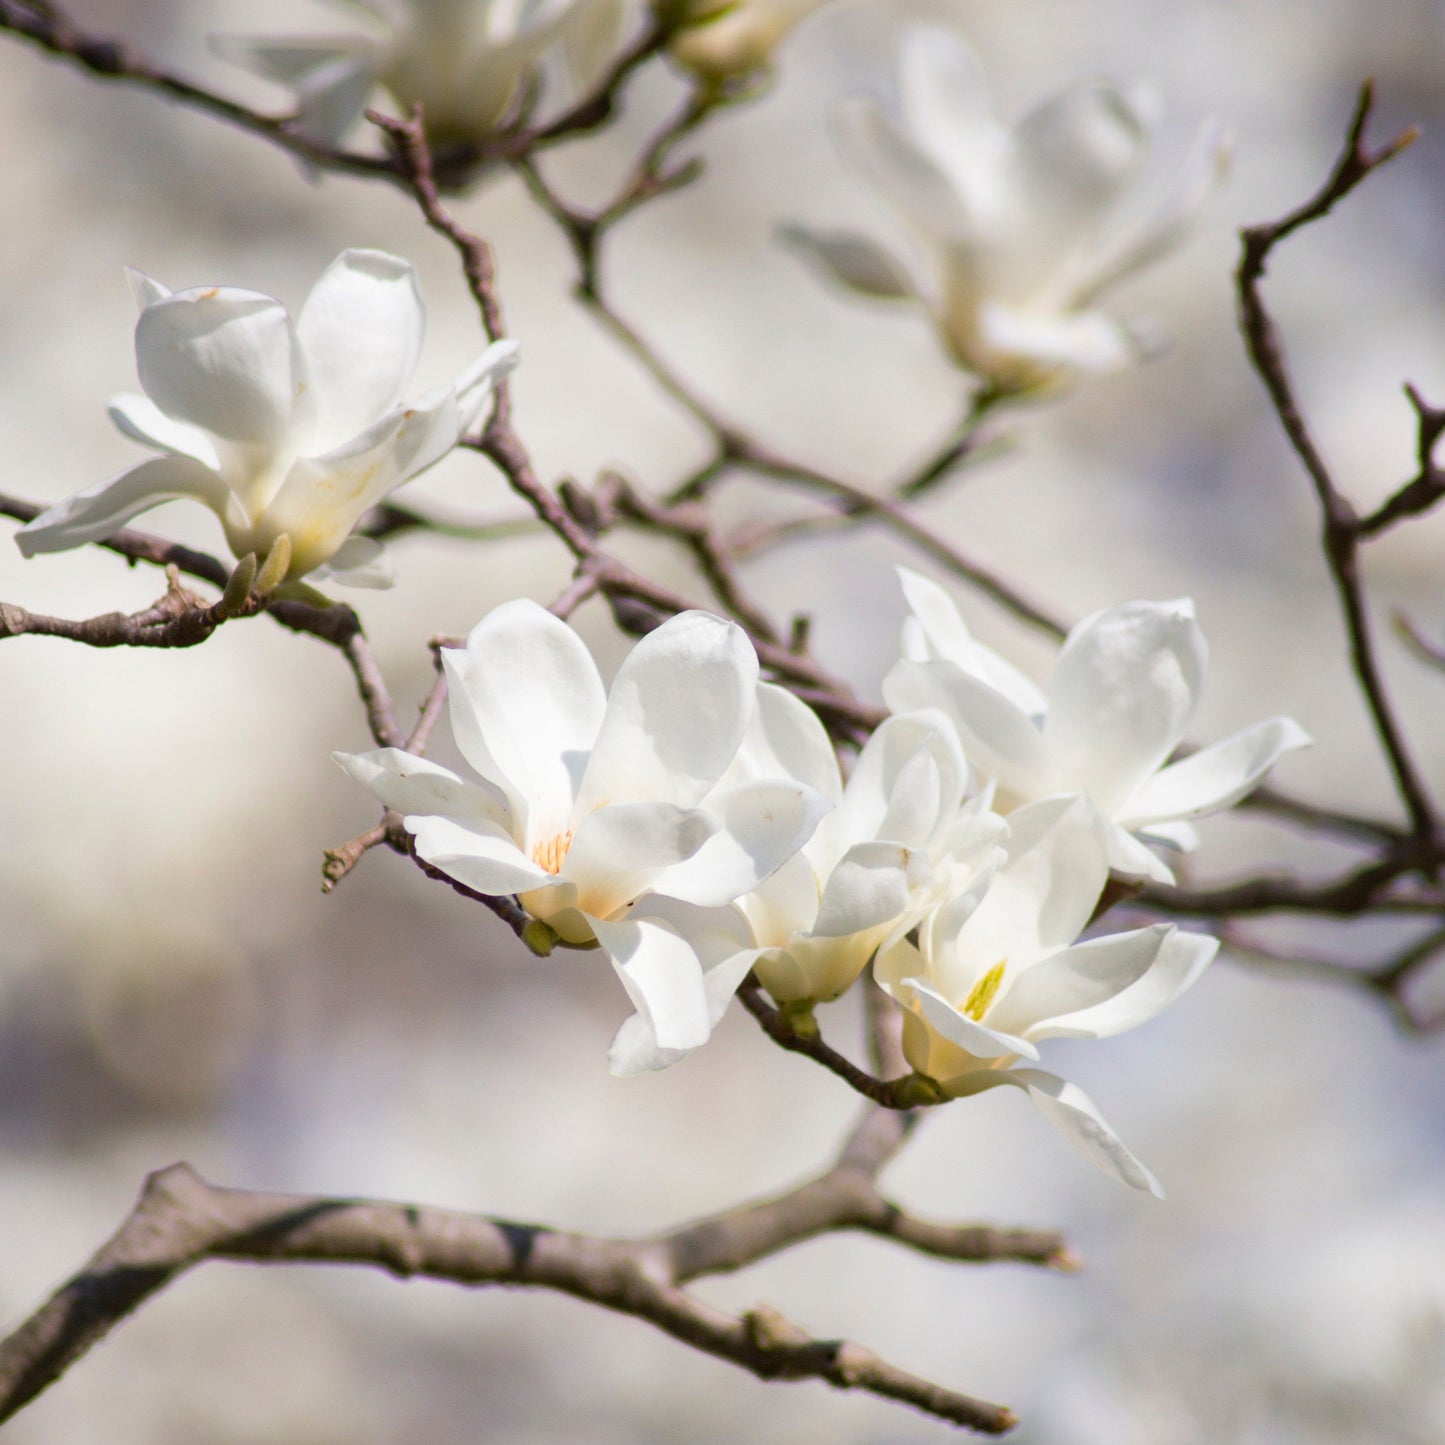 White Magnolia Officinalis flowers